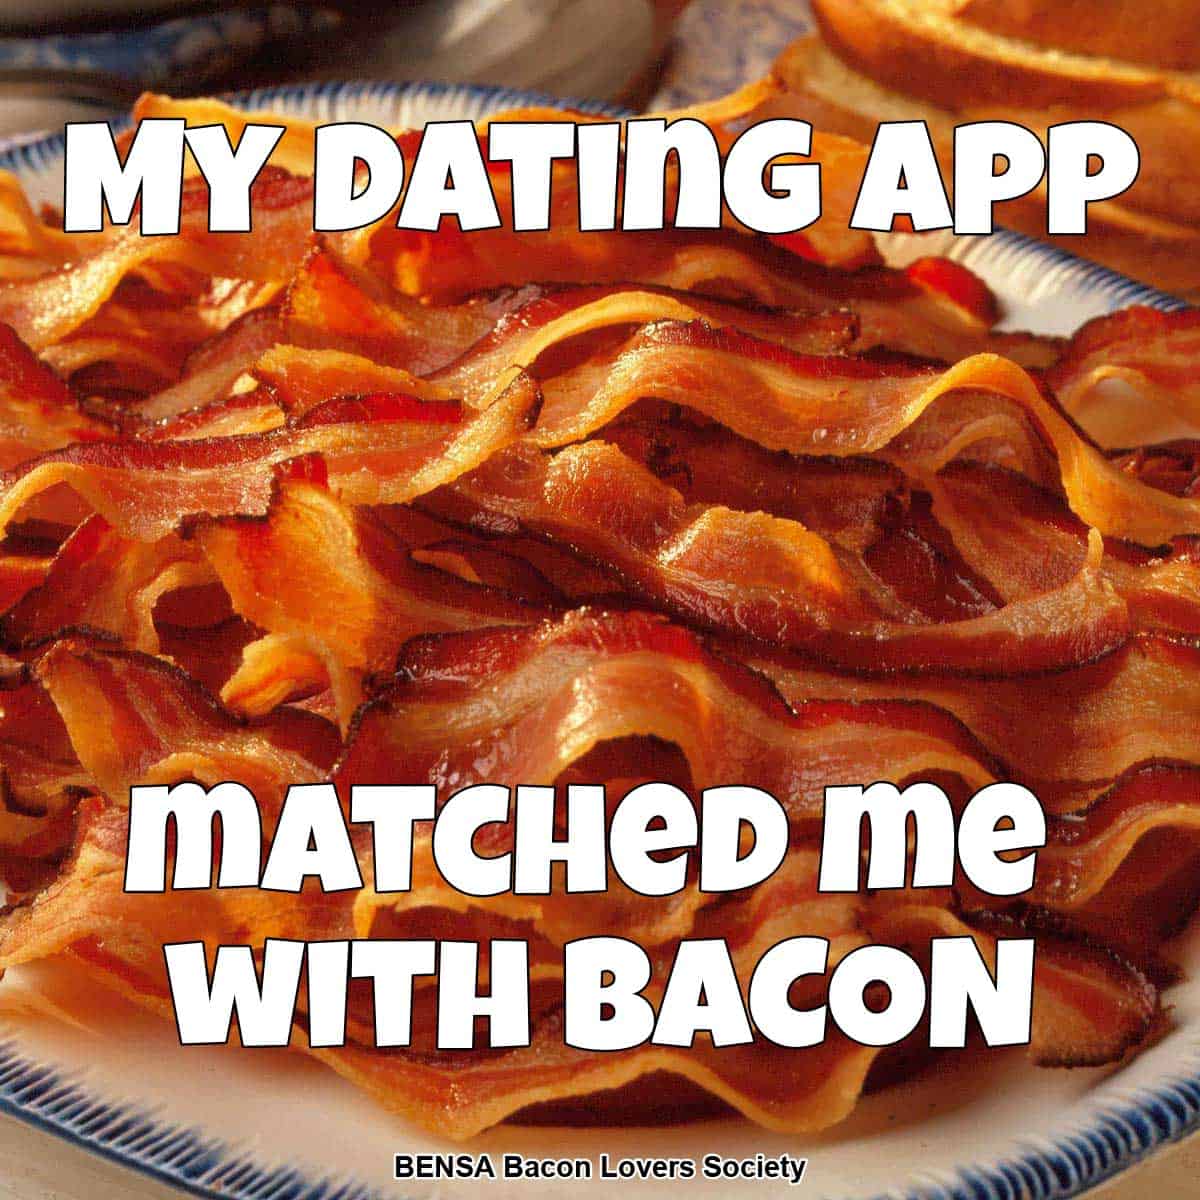 My dating app 1